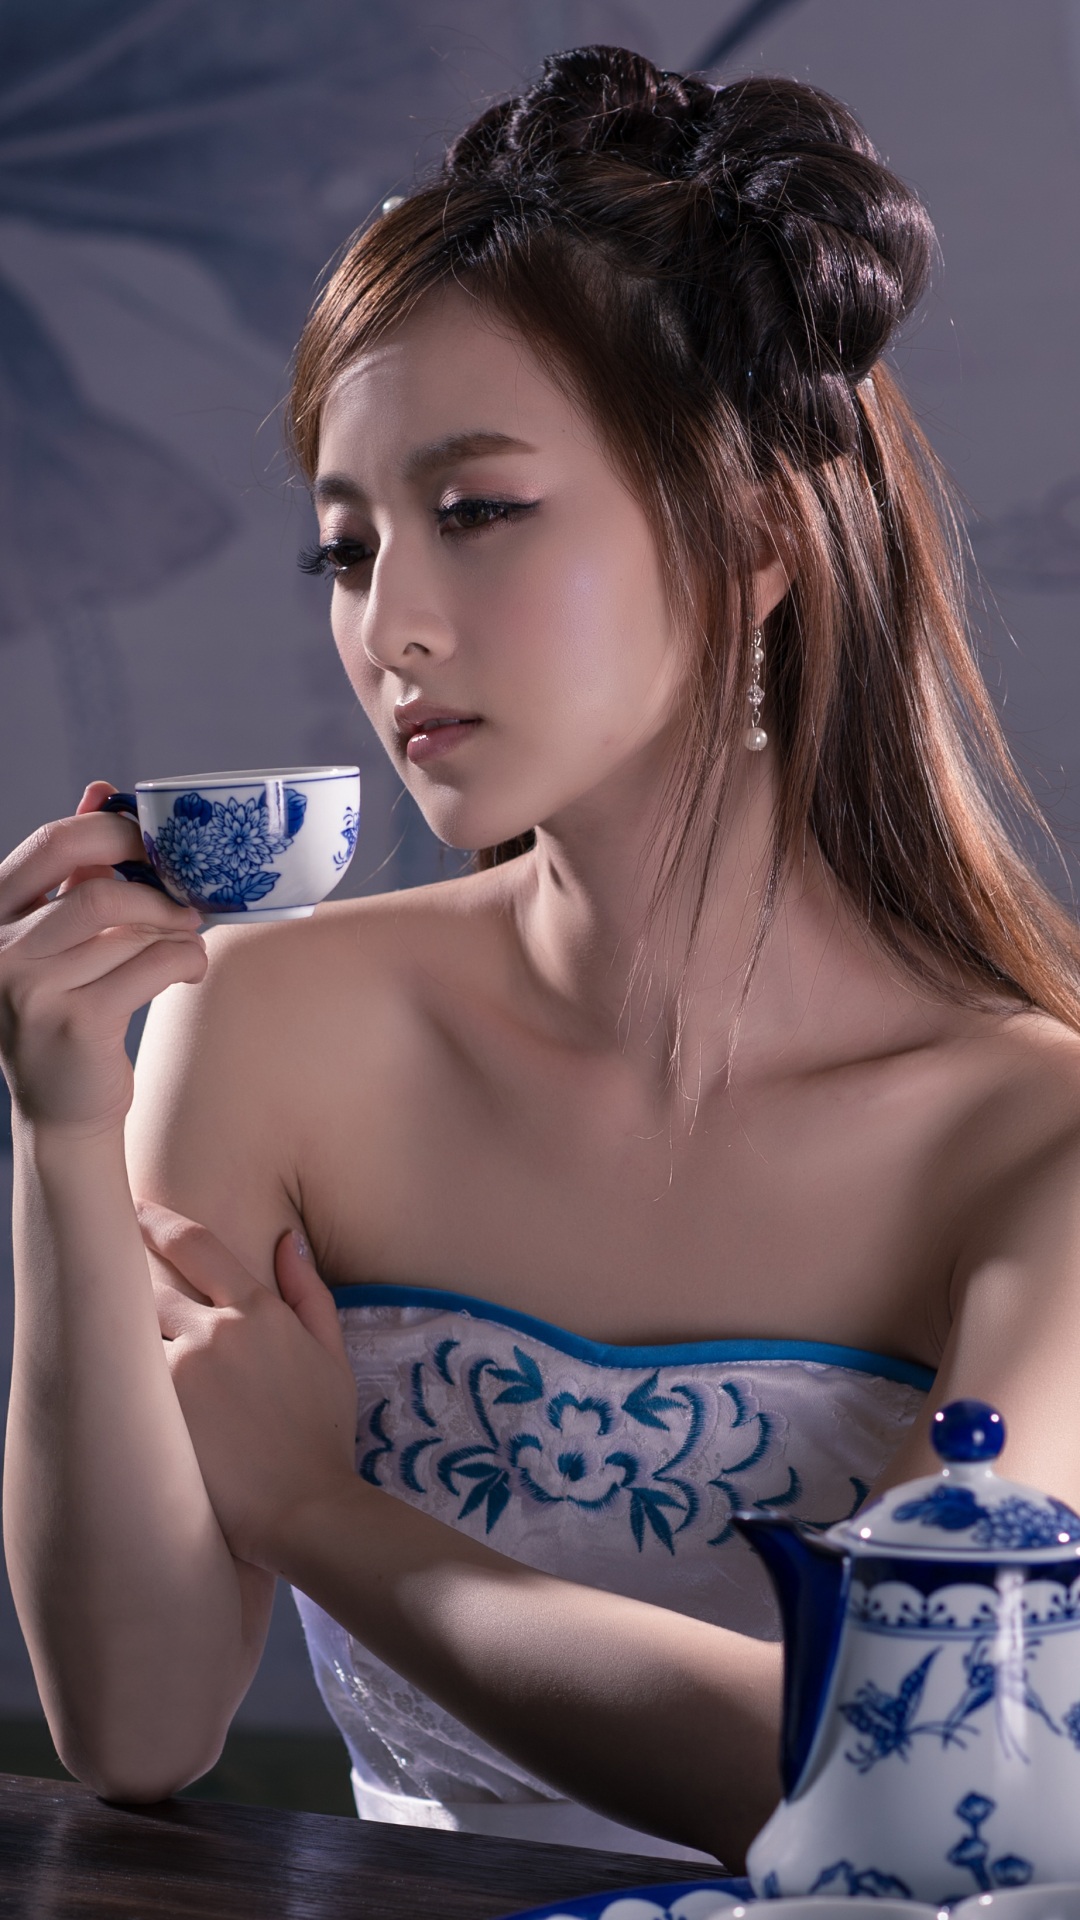 china, dress, women, mikako zhang kaijie, asian, taiwanese, chinese, cup, hair dress, tea set for android